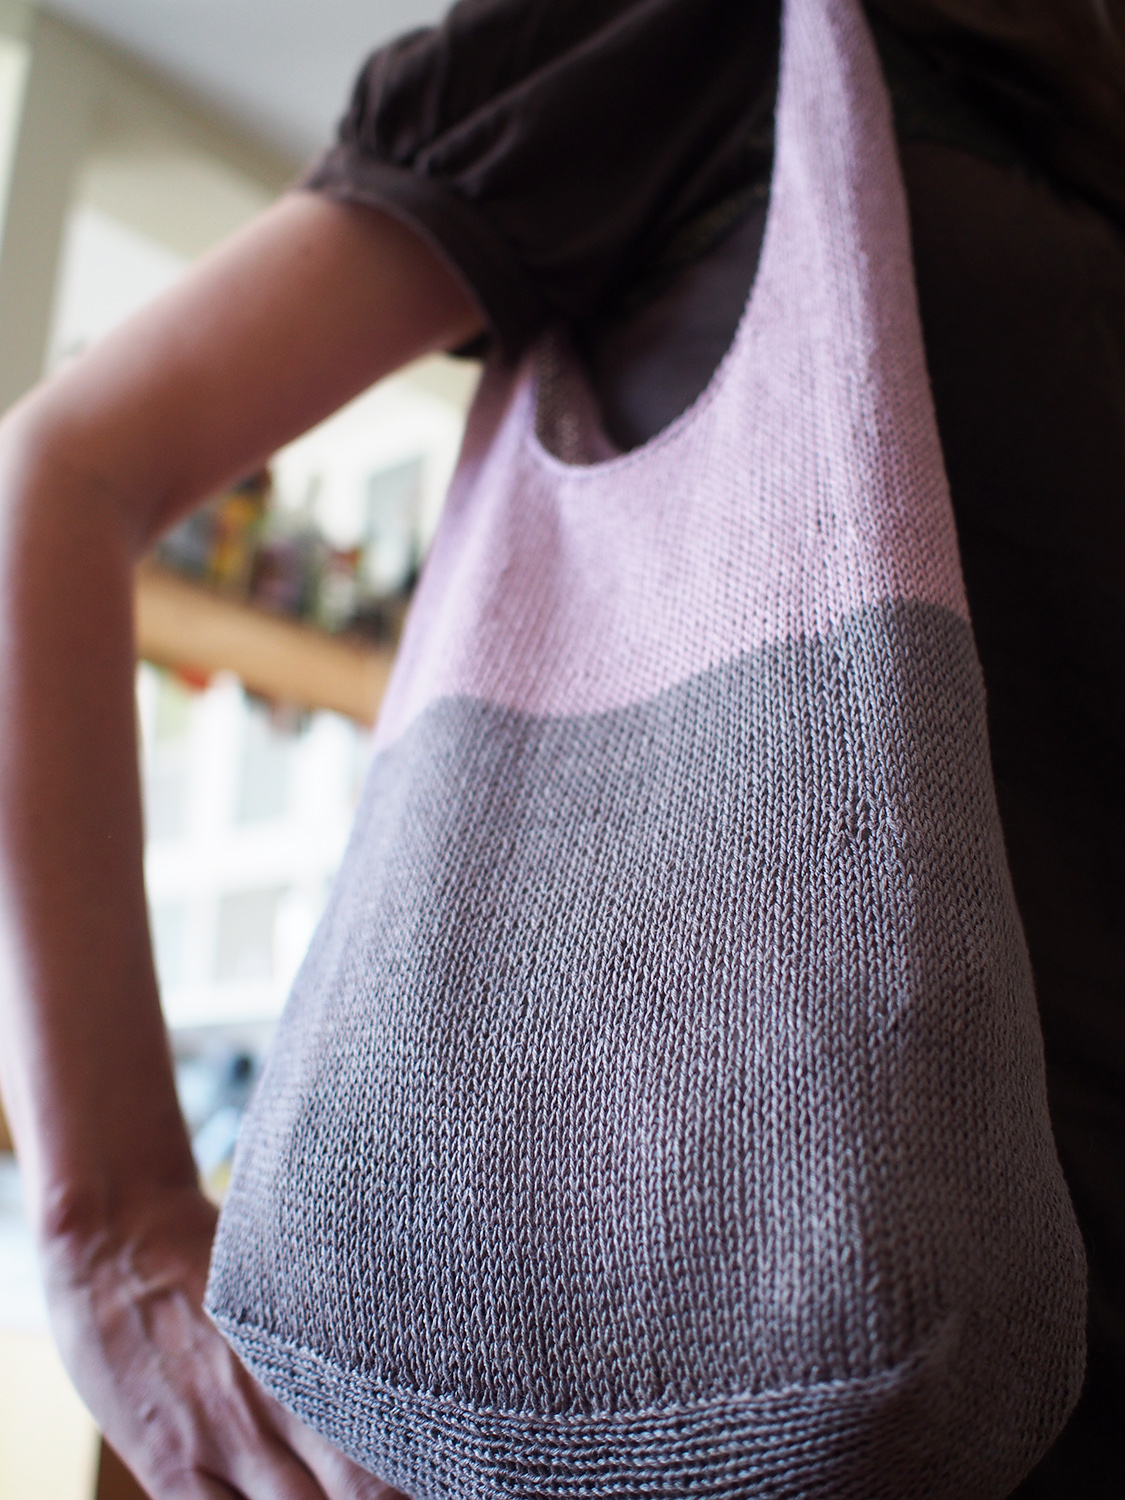 Handy Hobo Handbags to Knit & Crochet pattern from Stitch Diva Studios